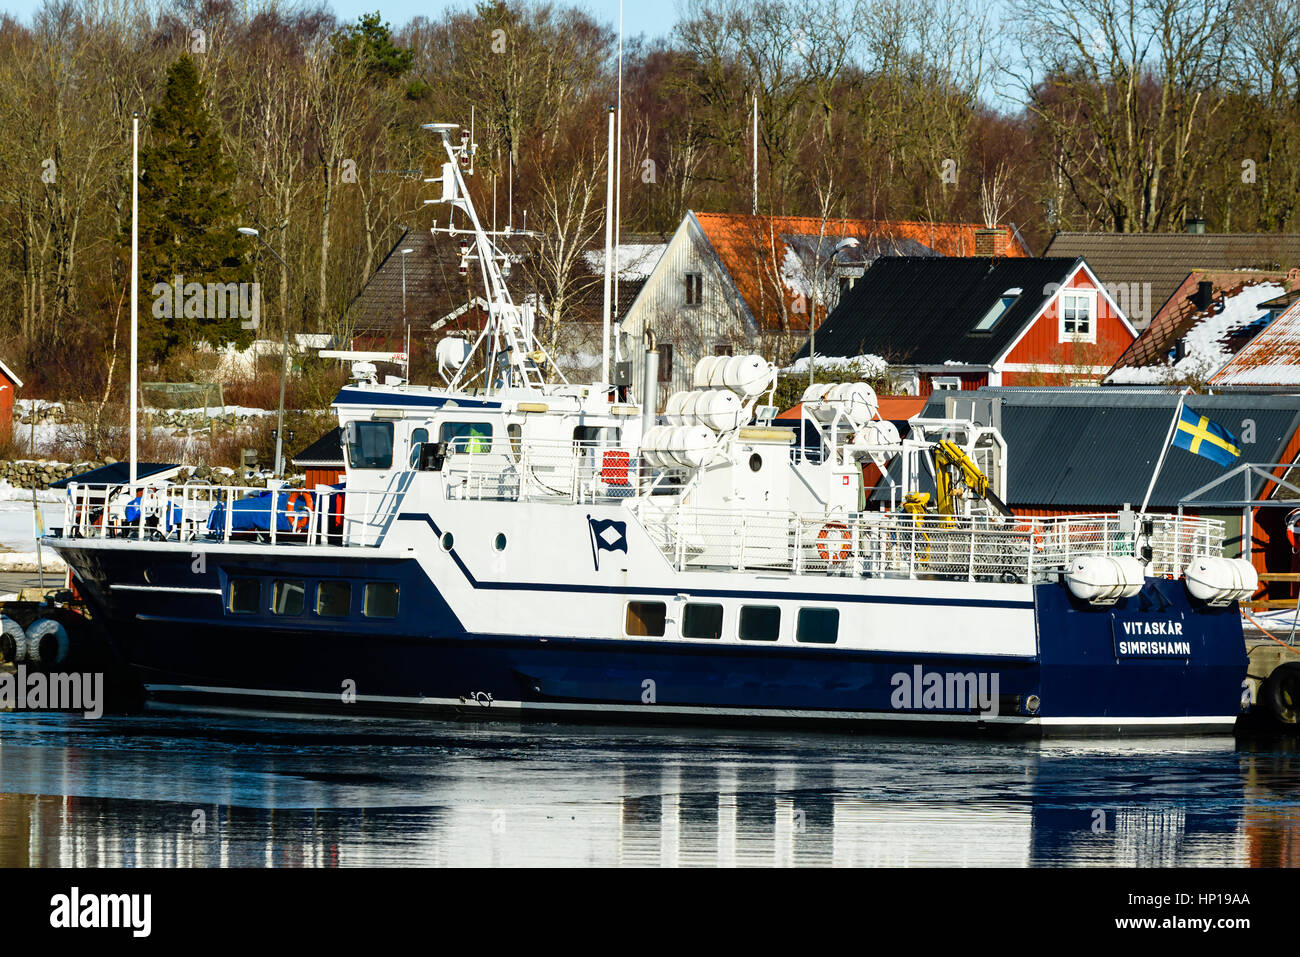 Nogersund, Svezia - 14 Febbraio 2017: documentario del traghetto locale Vitaskar al dock. Vittskar trasporta persone tra Nogersund e hano isl Foto Stock